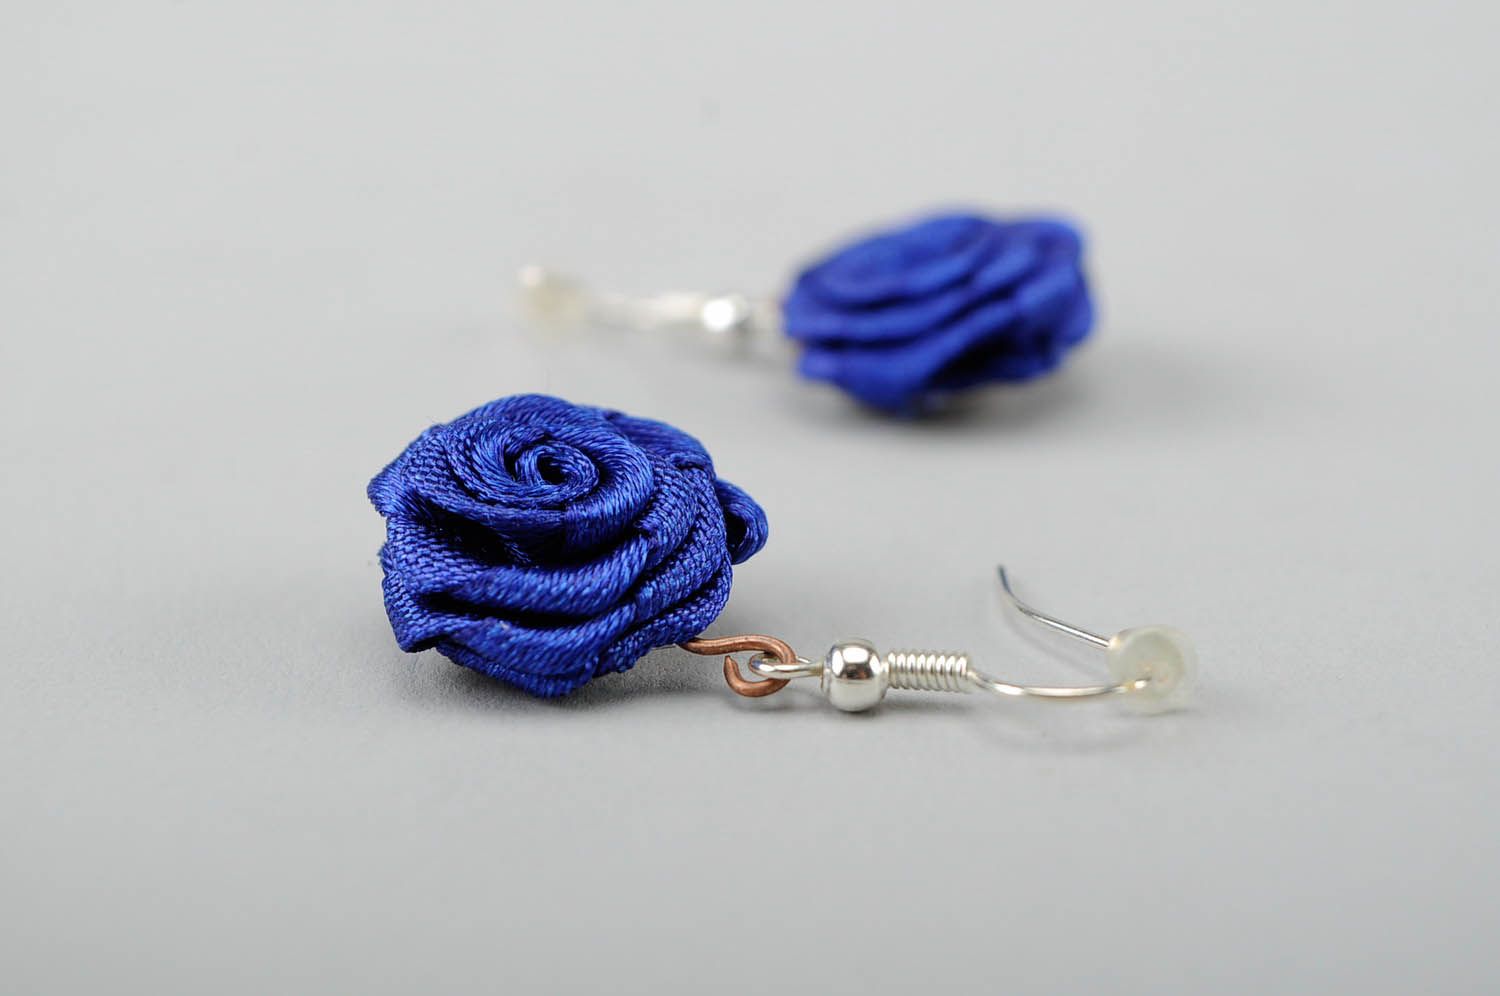 Earrings Blue Rose photo 1